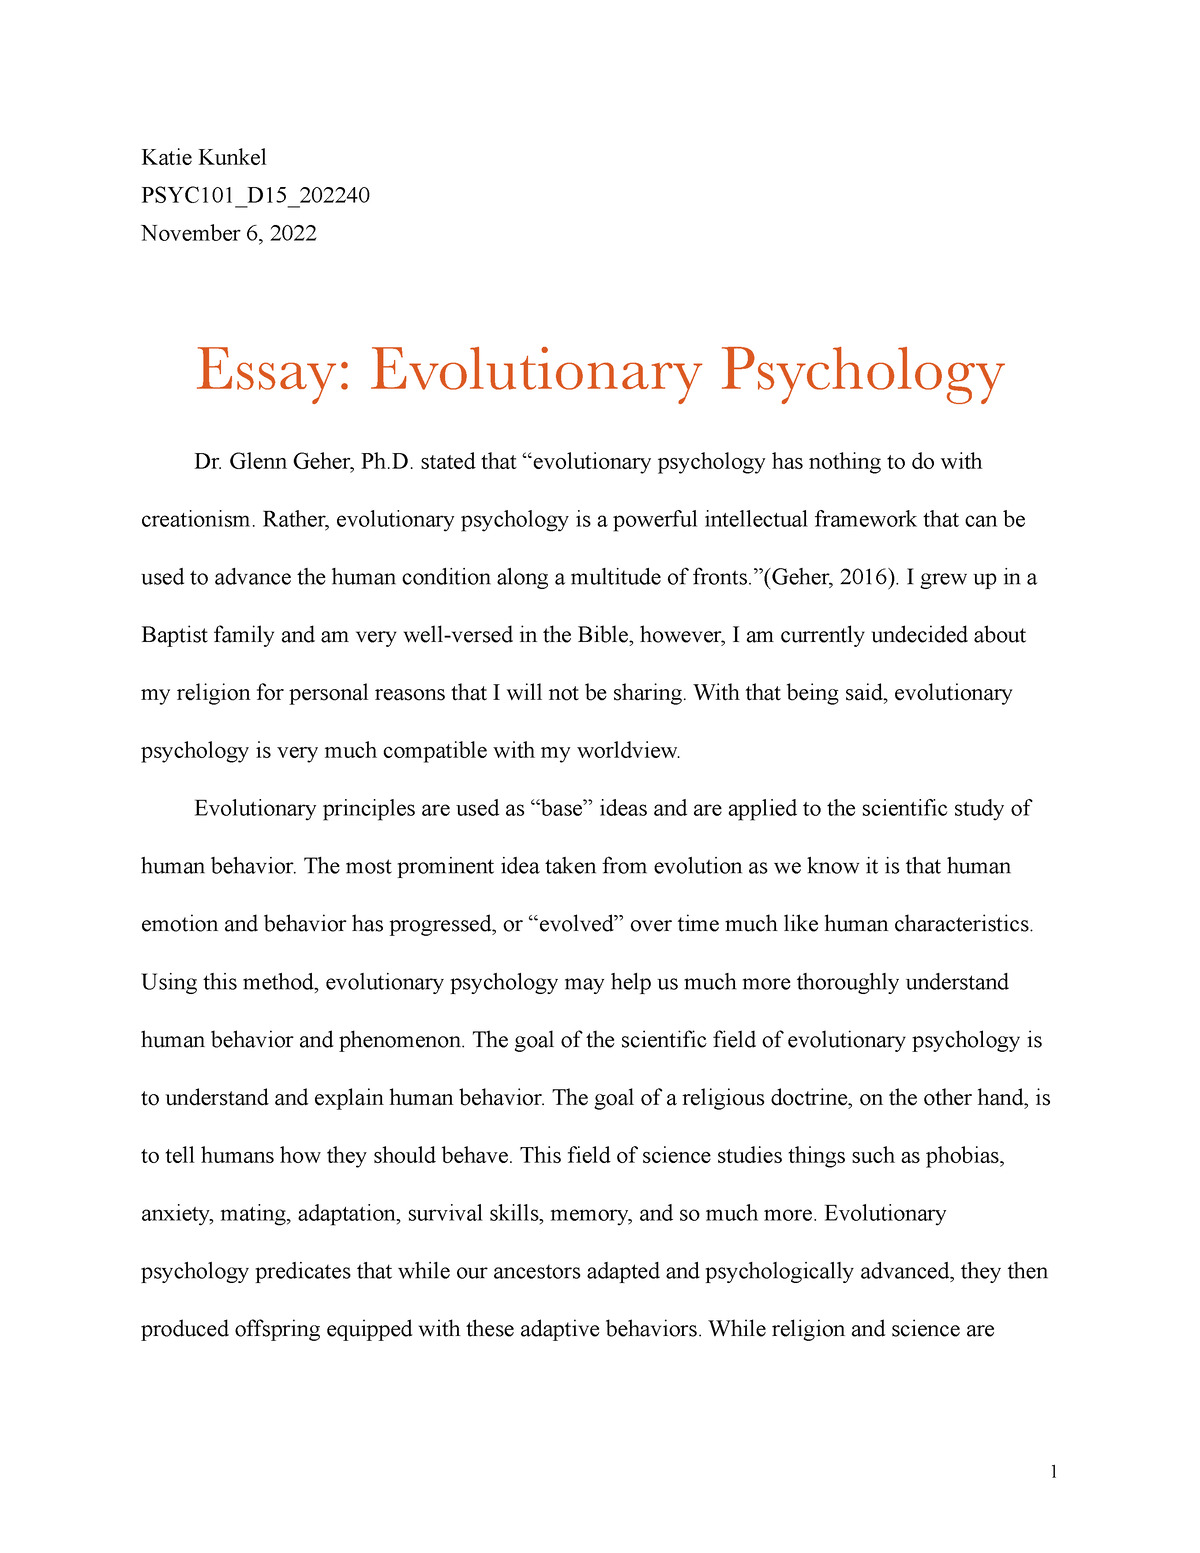 evolutionary psychology essay ideas